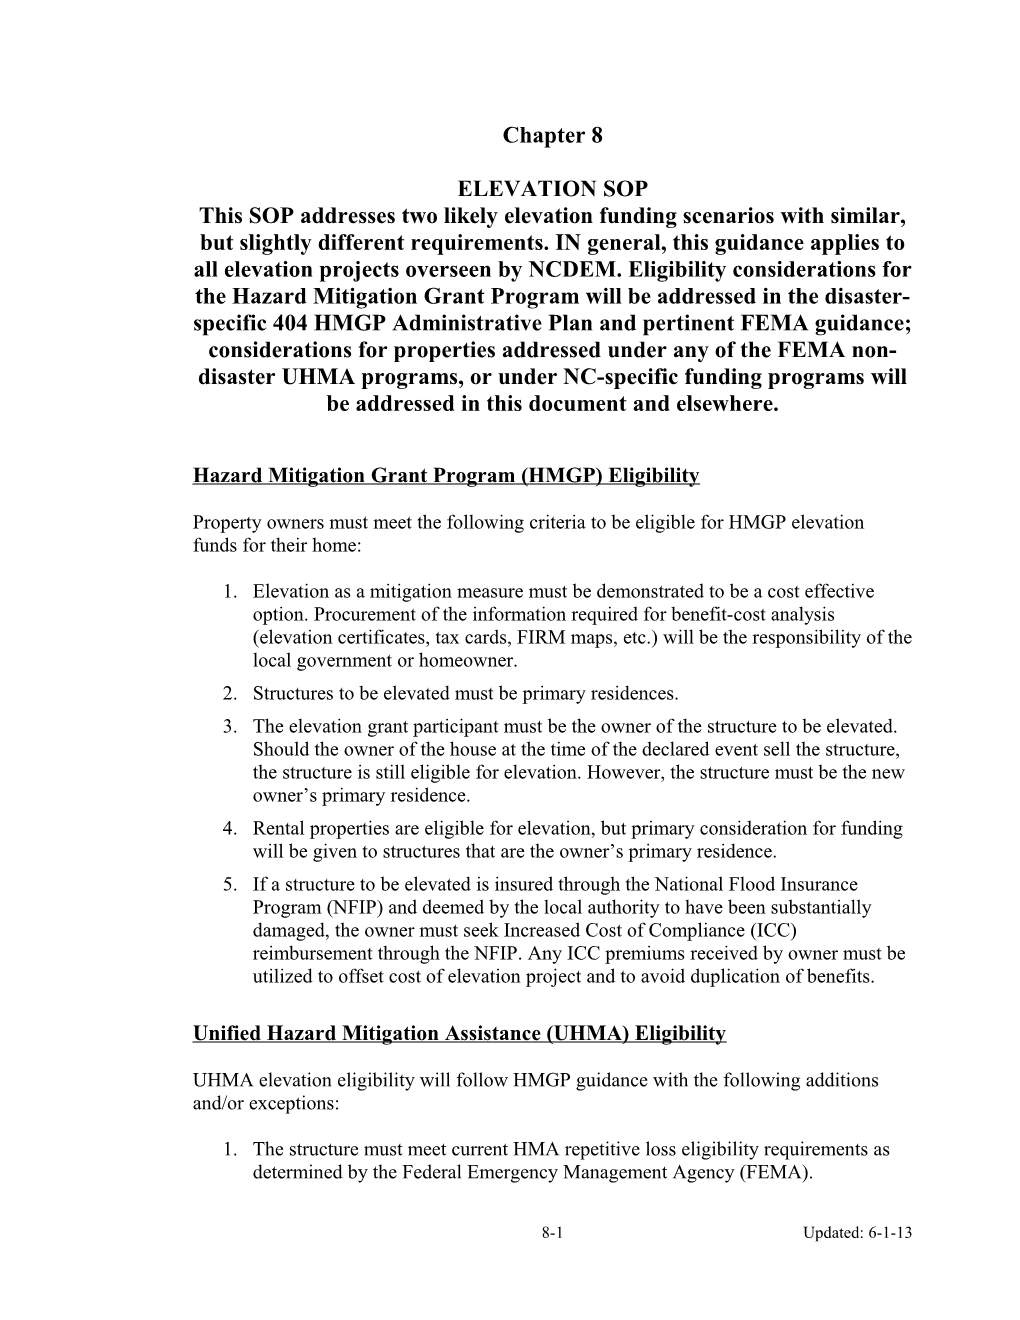 Hazard Mitigation Grant Program (HMGP) Eligibility